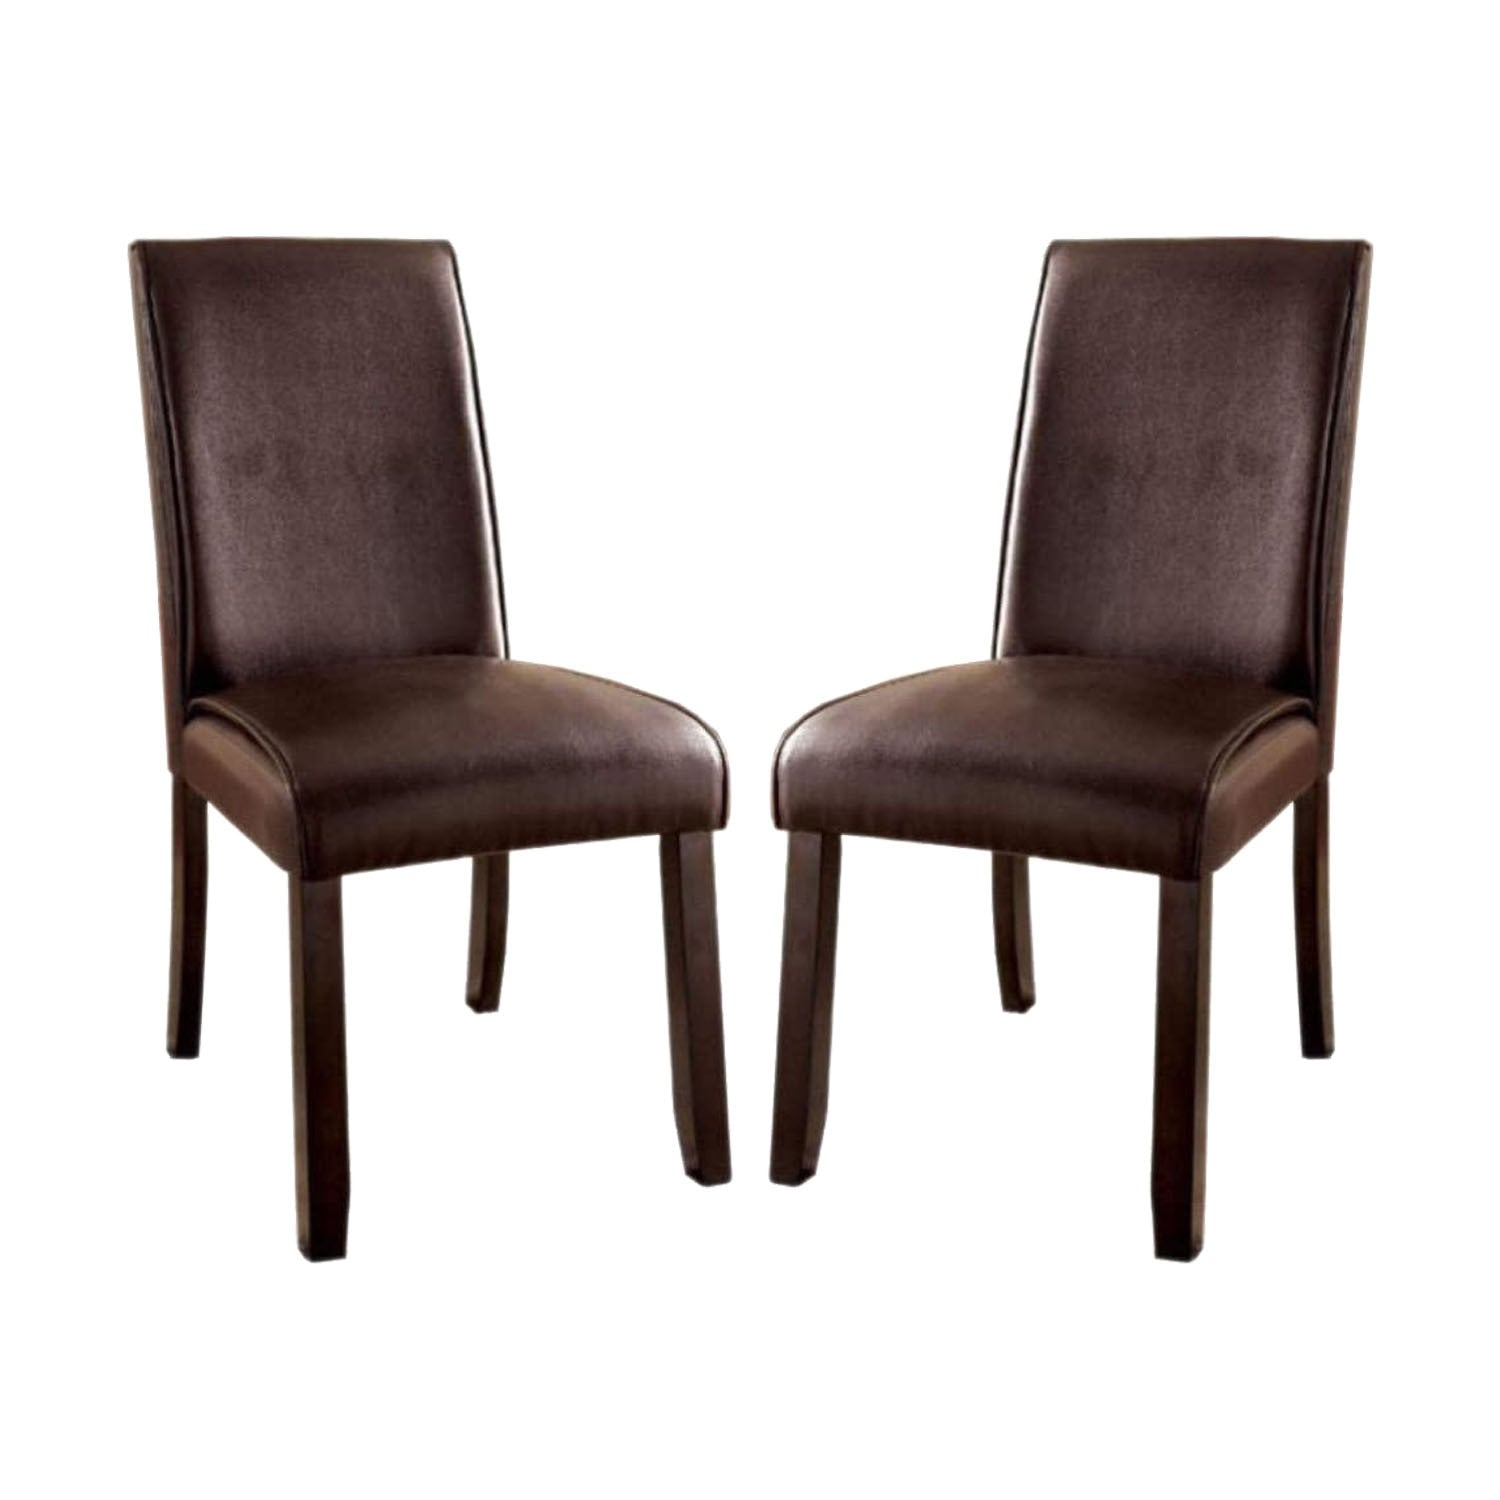 Set of 2 fabric Padded Side Chairs in Dark Walnut